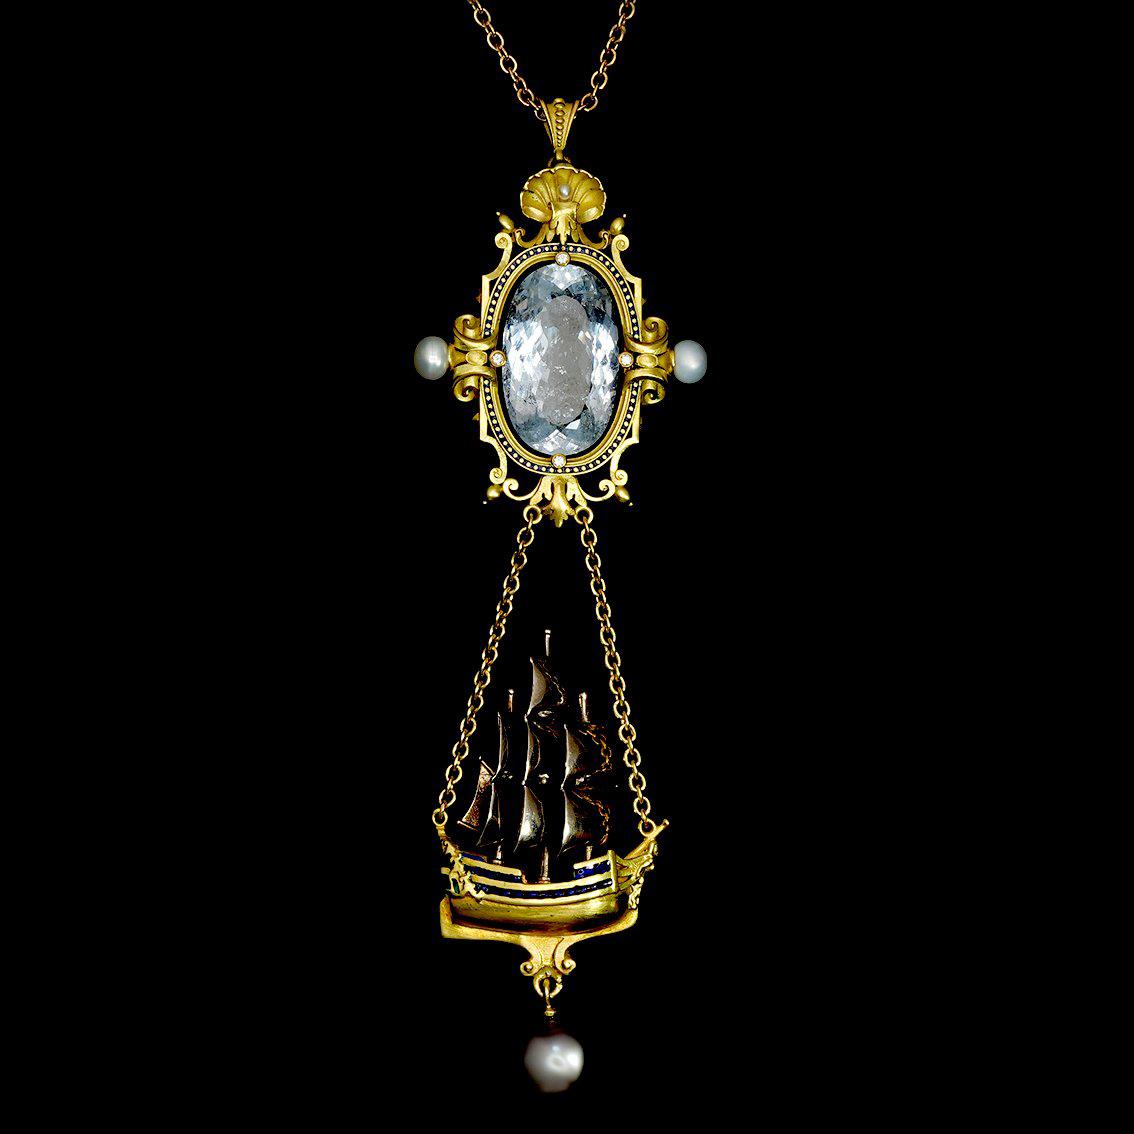 Aquamarine, Diamonds, Pearls, Enamel, 18kt Gold Antique Style Pendant Necklace For Sale 5